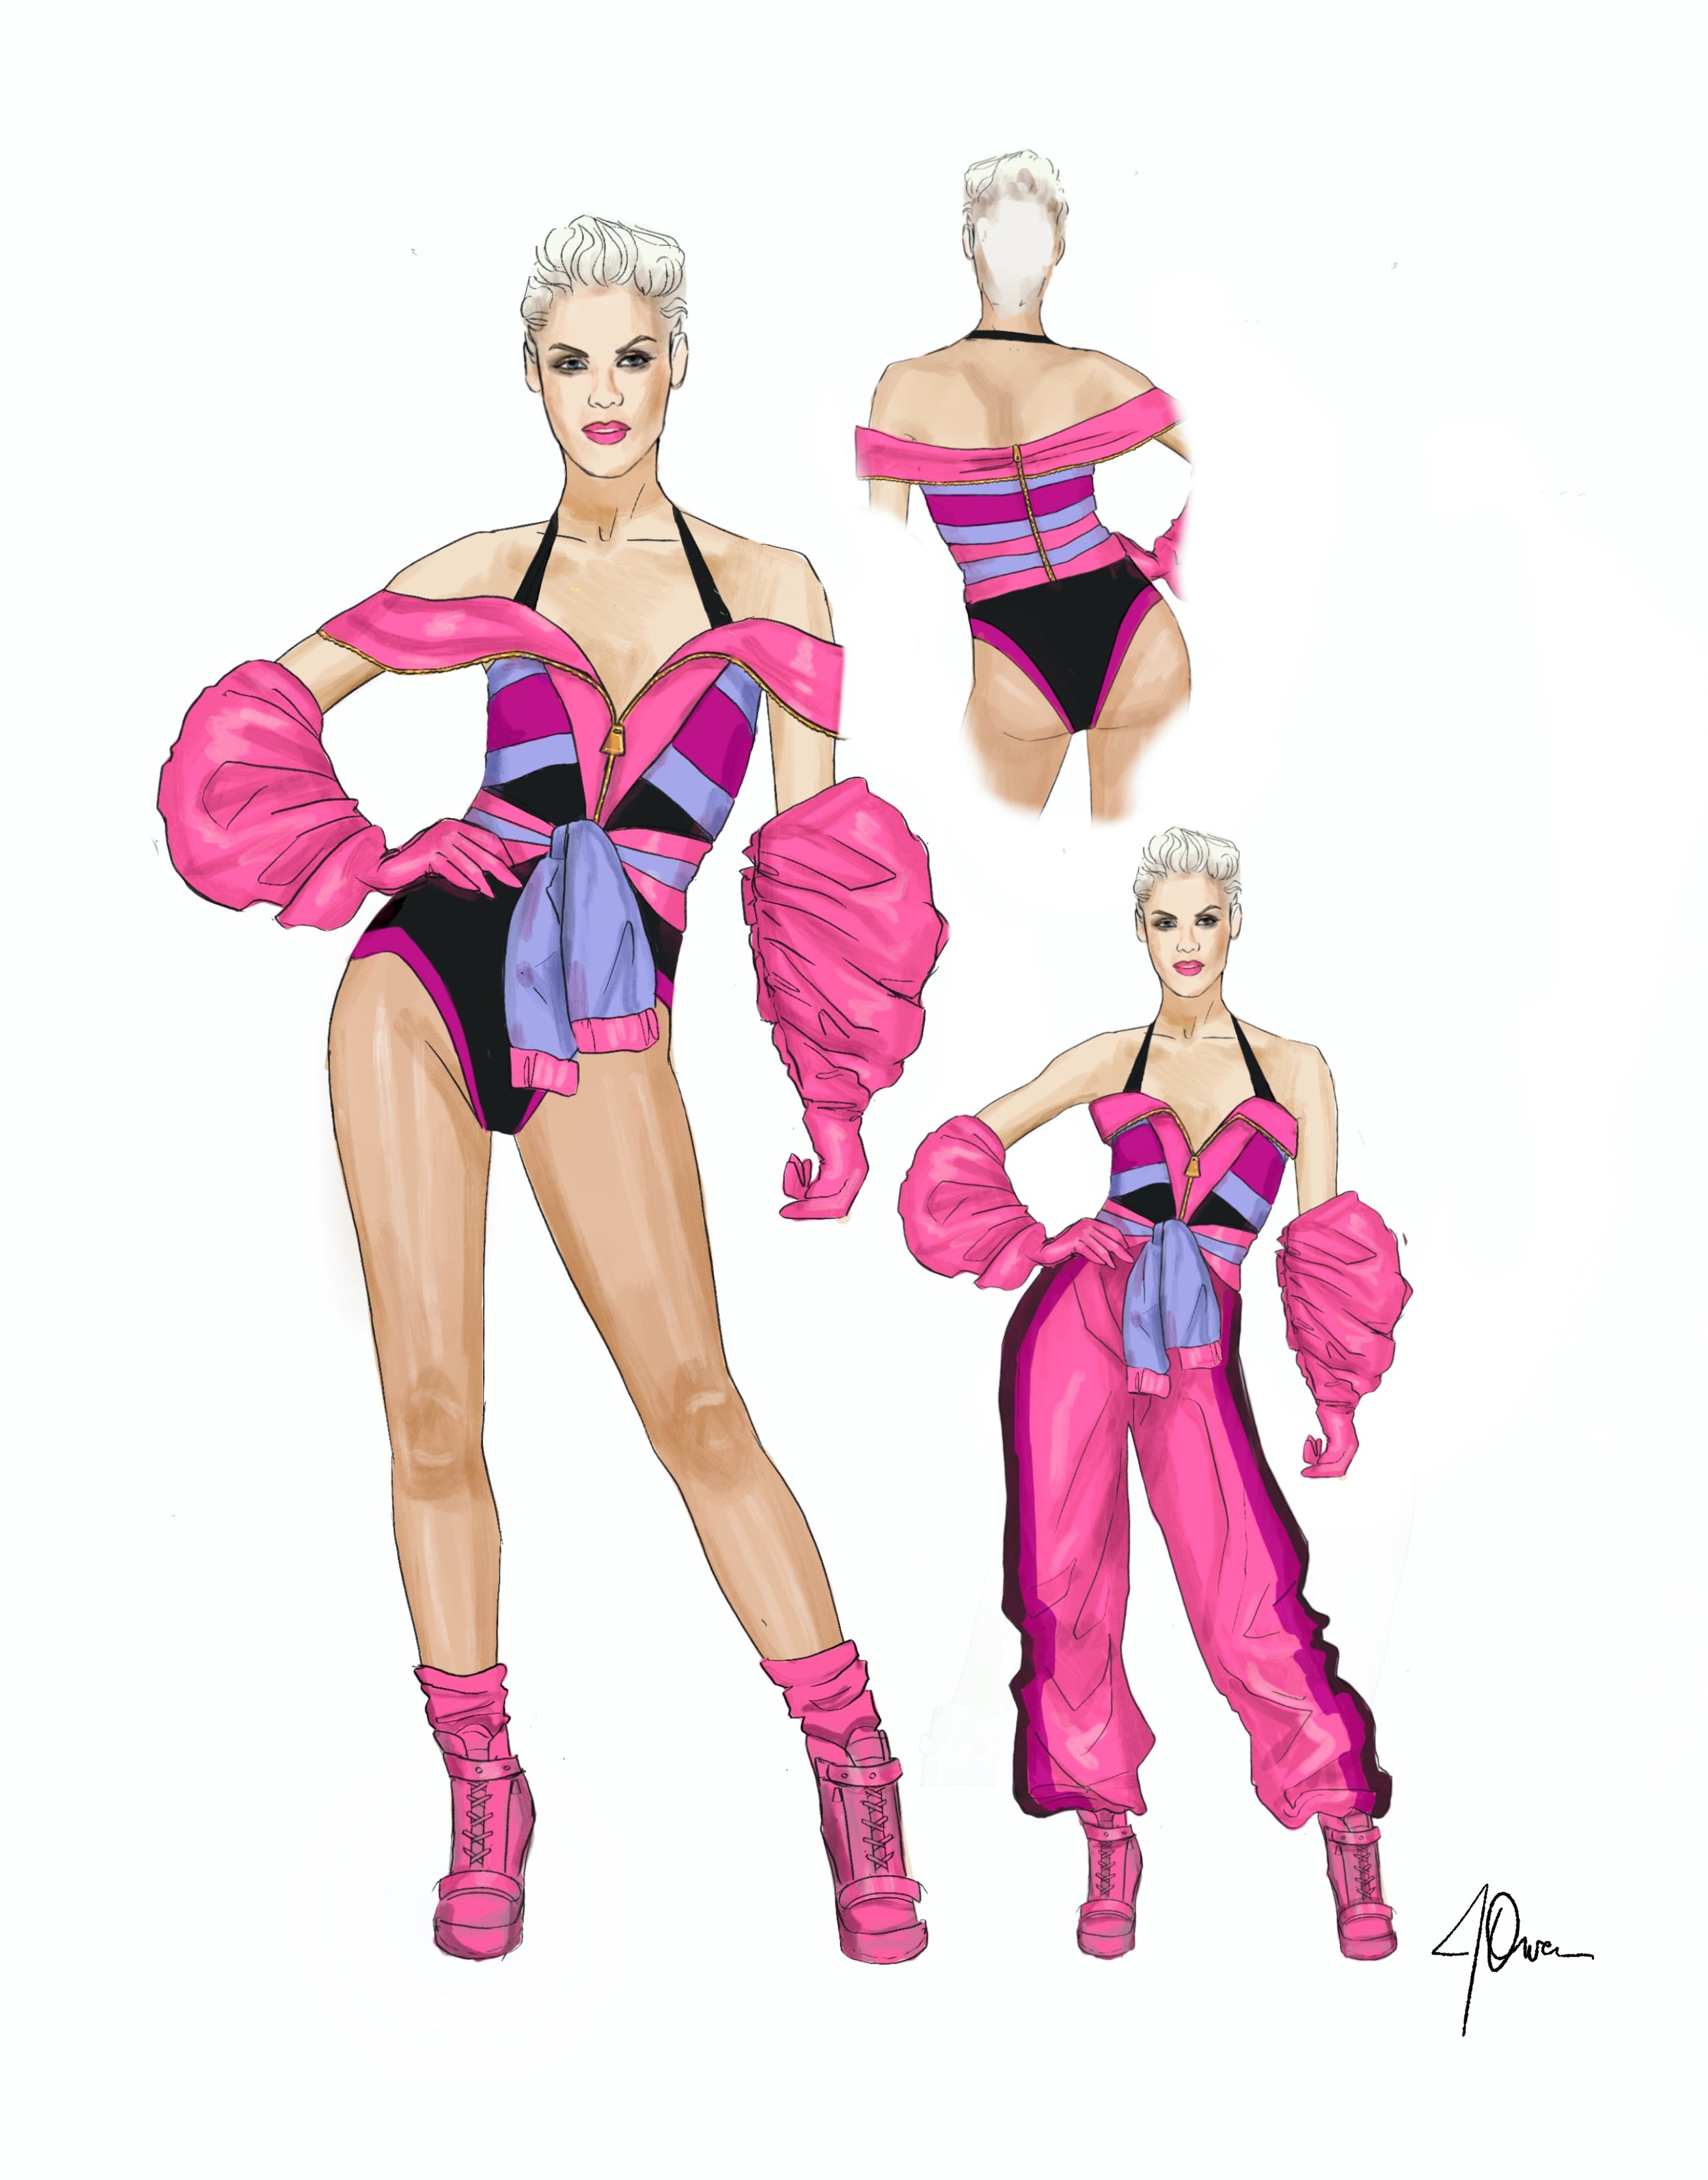 Costume Illustration for Pink